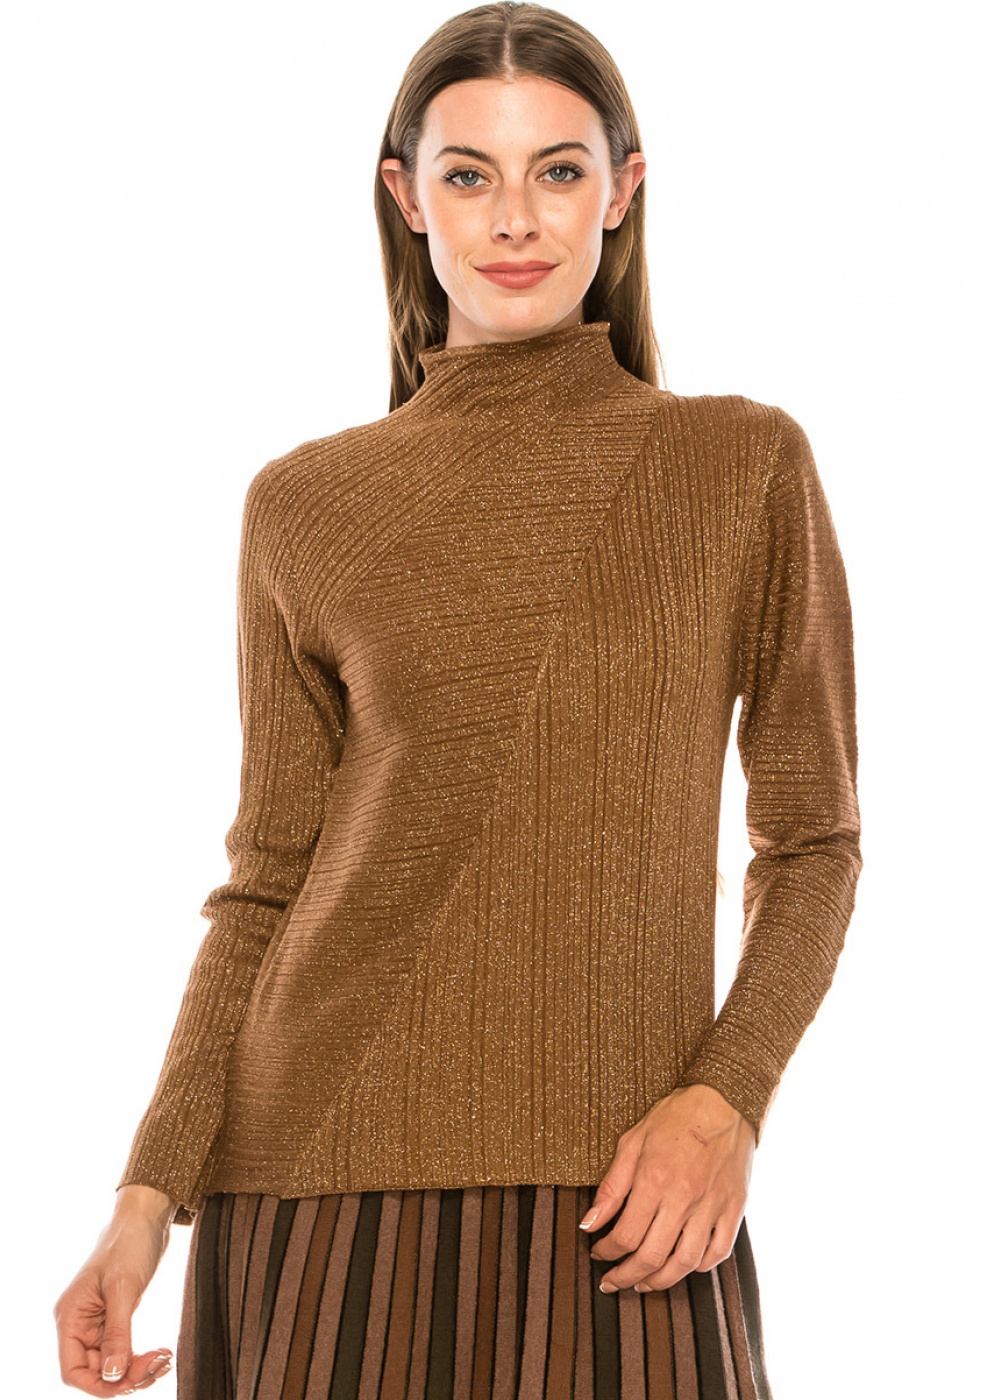 Shiny lurex sweater in rust